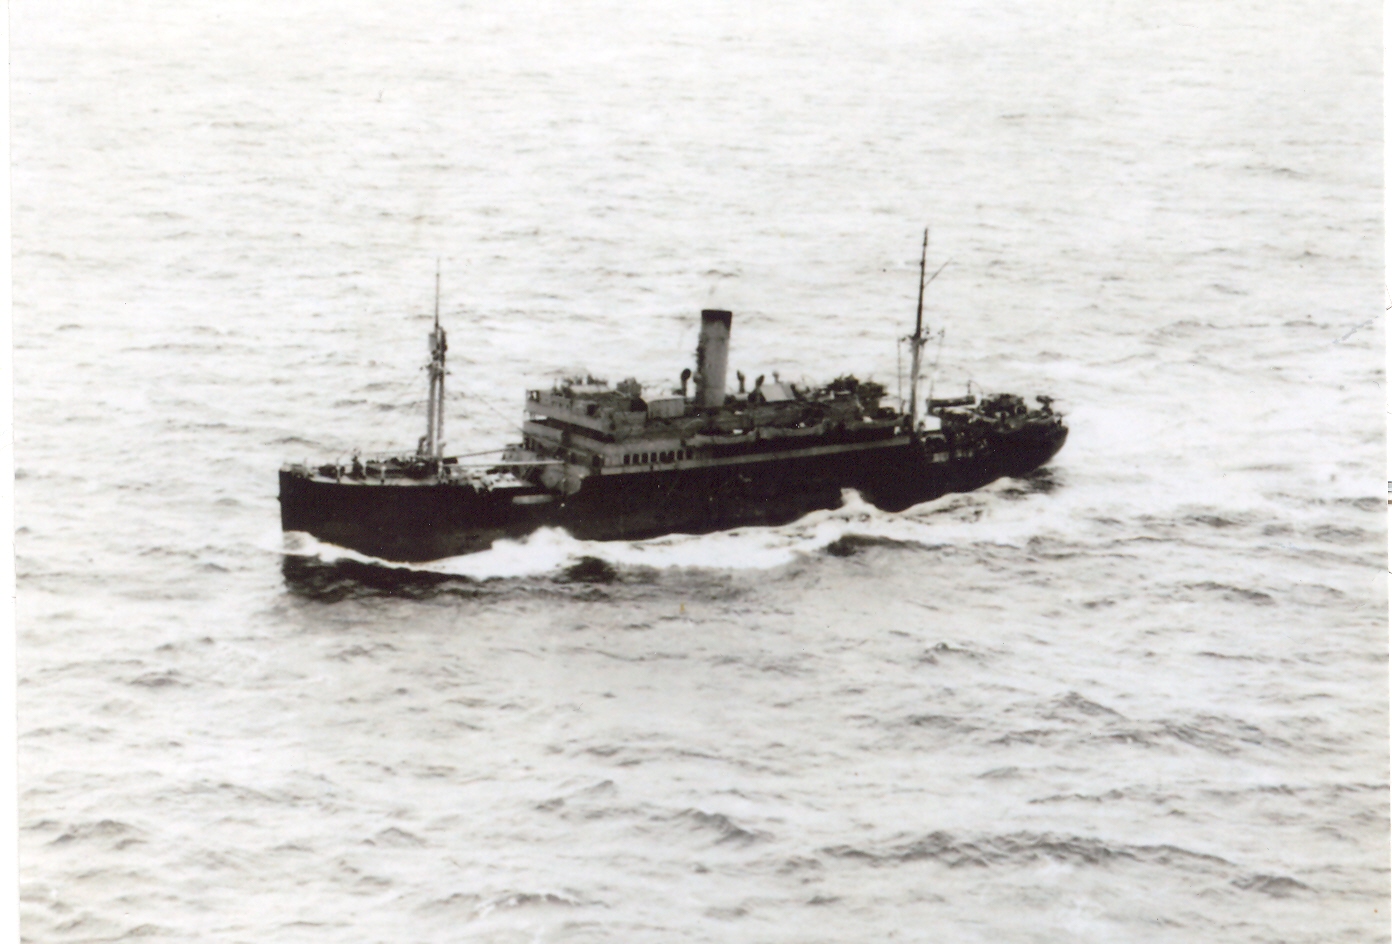 RAF SS Nerissa 30 April 1941 2 of 2